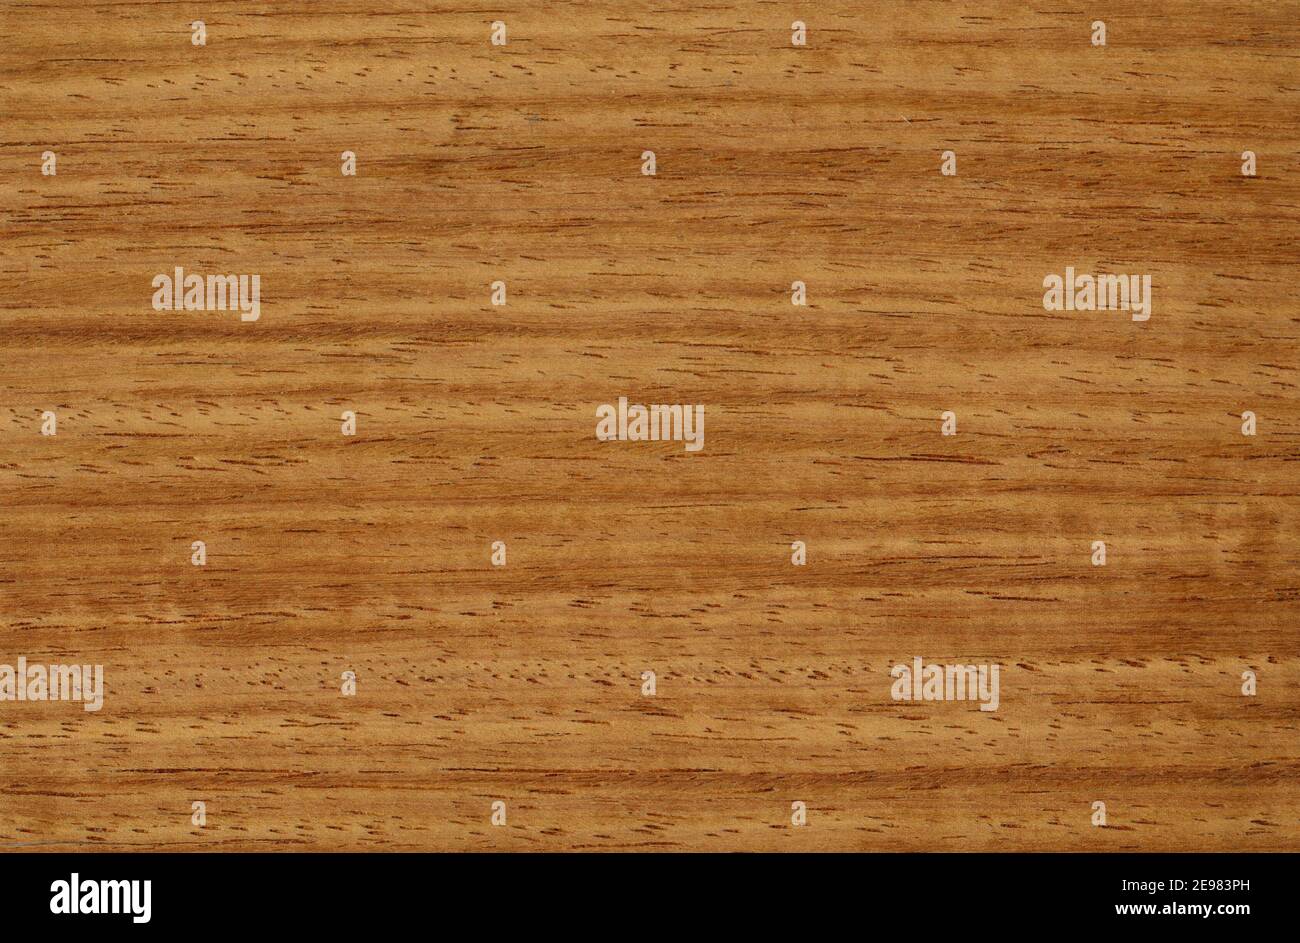 Natural Burma teak wood veneer surface for interior and exterior manufacturers use. Stock Photo